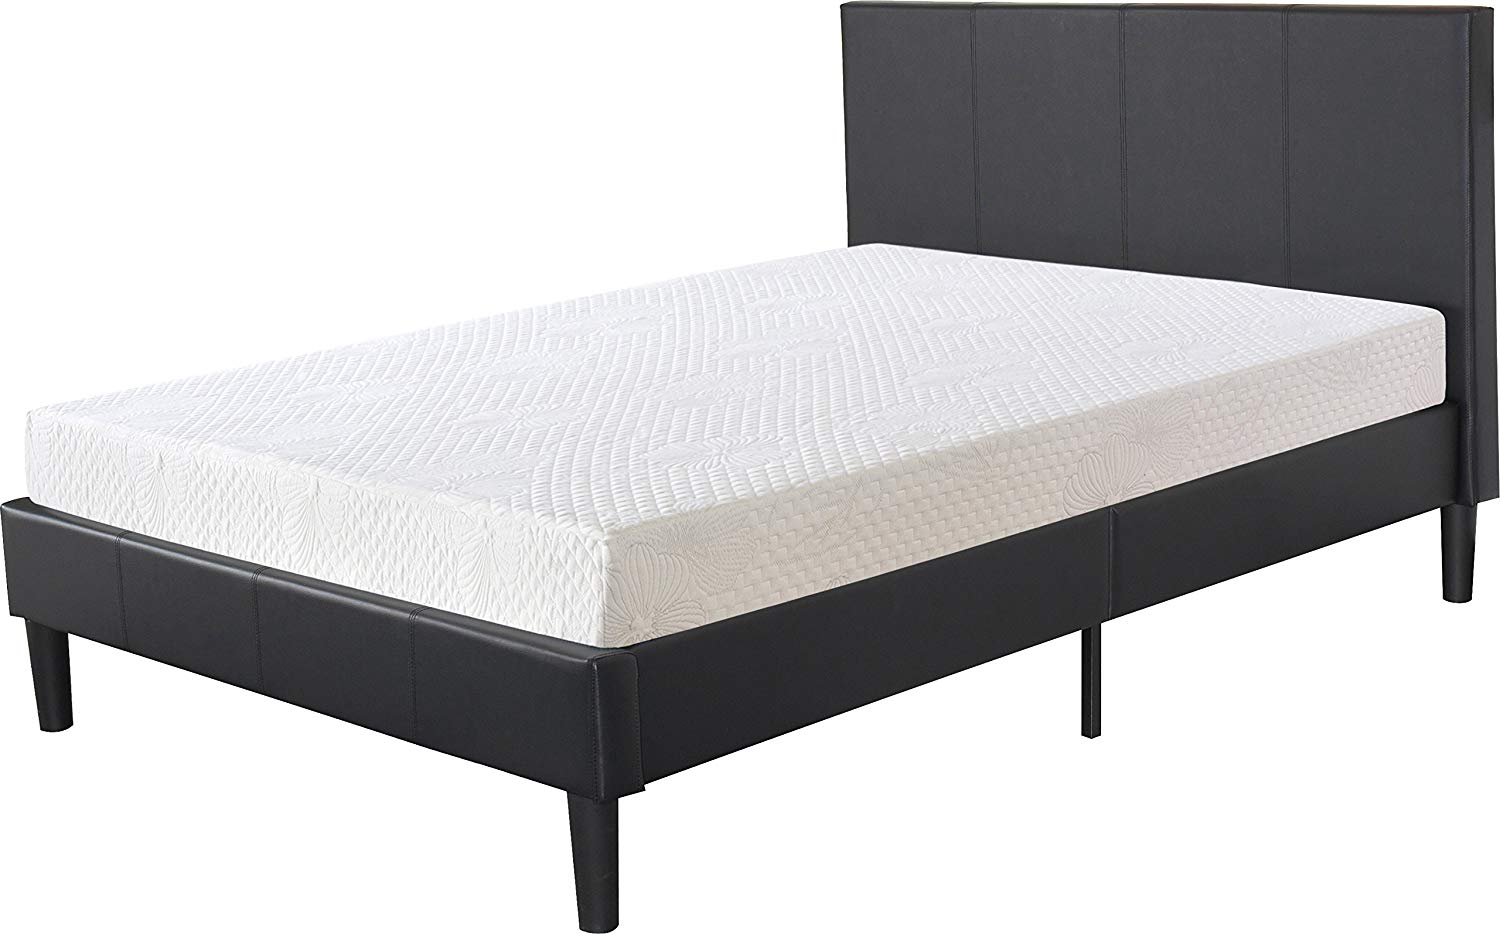 twin mattress for sale amazon